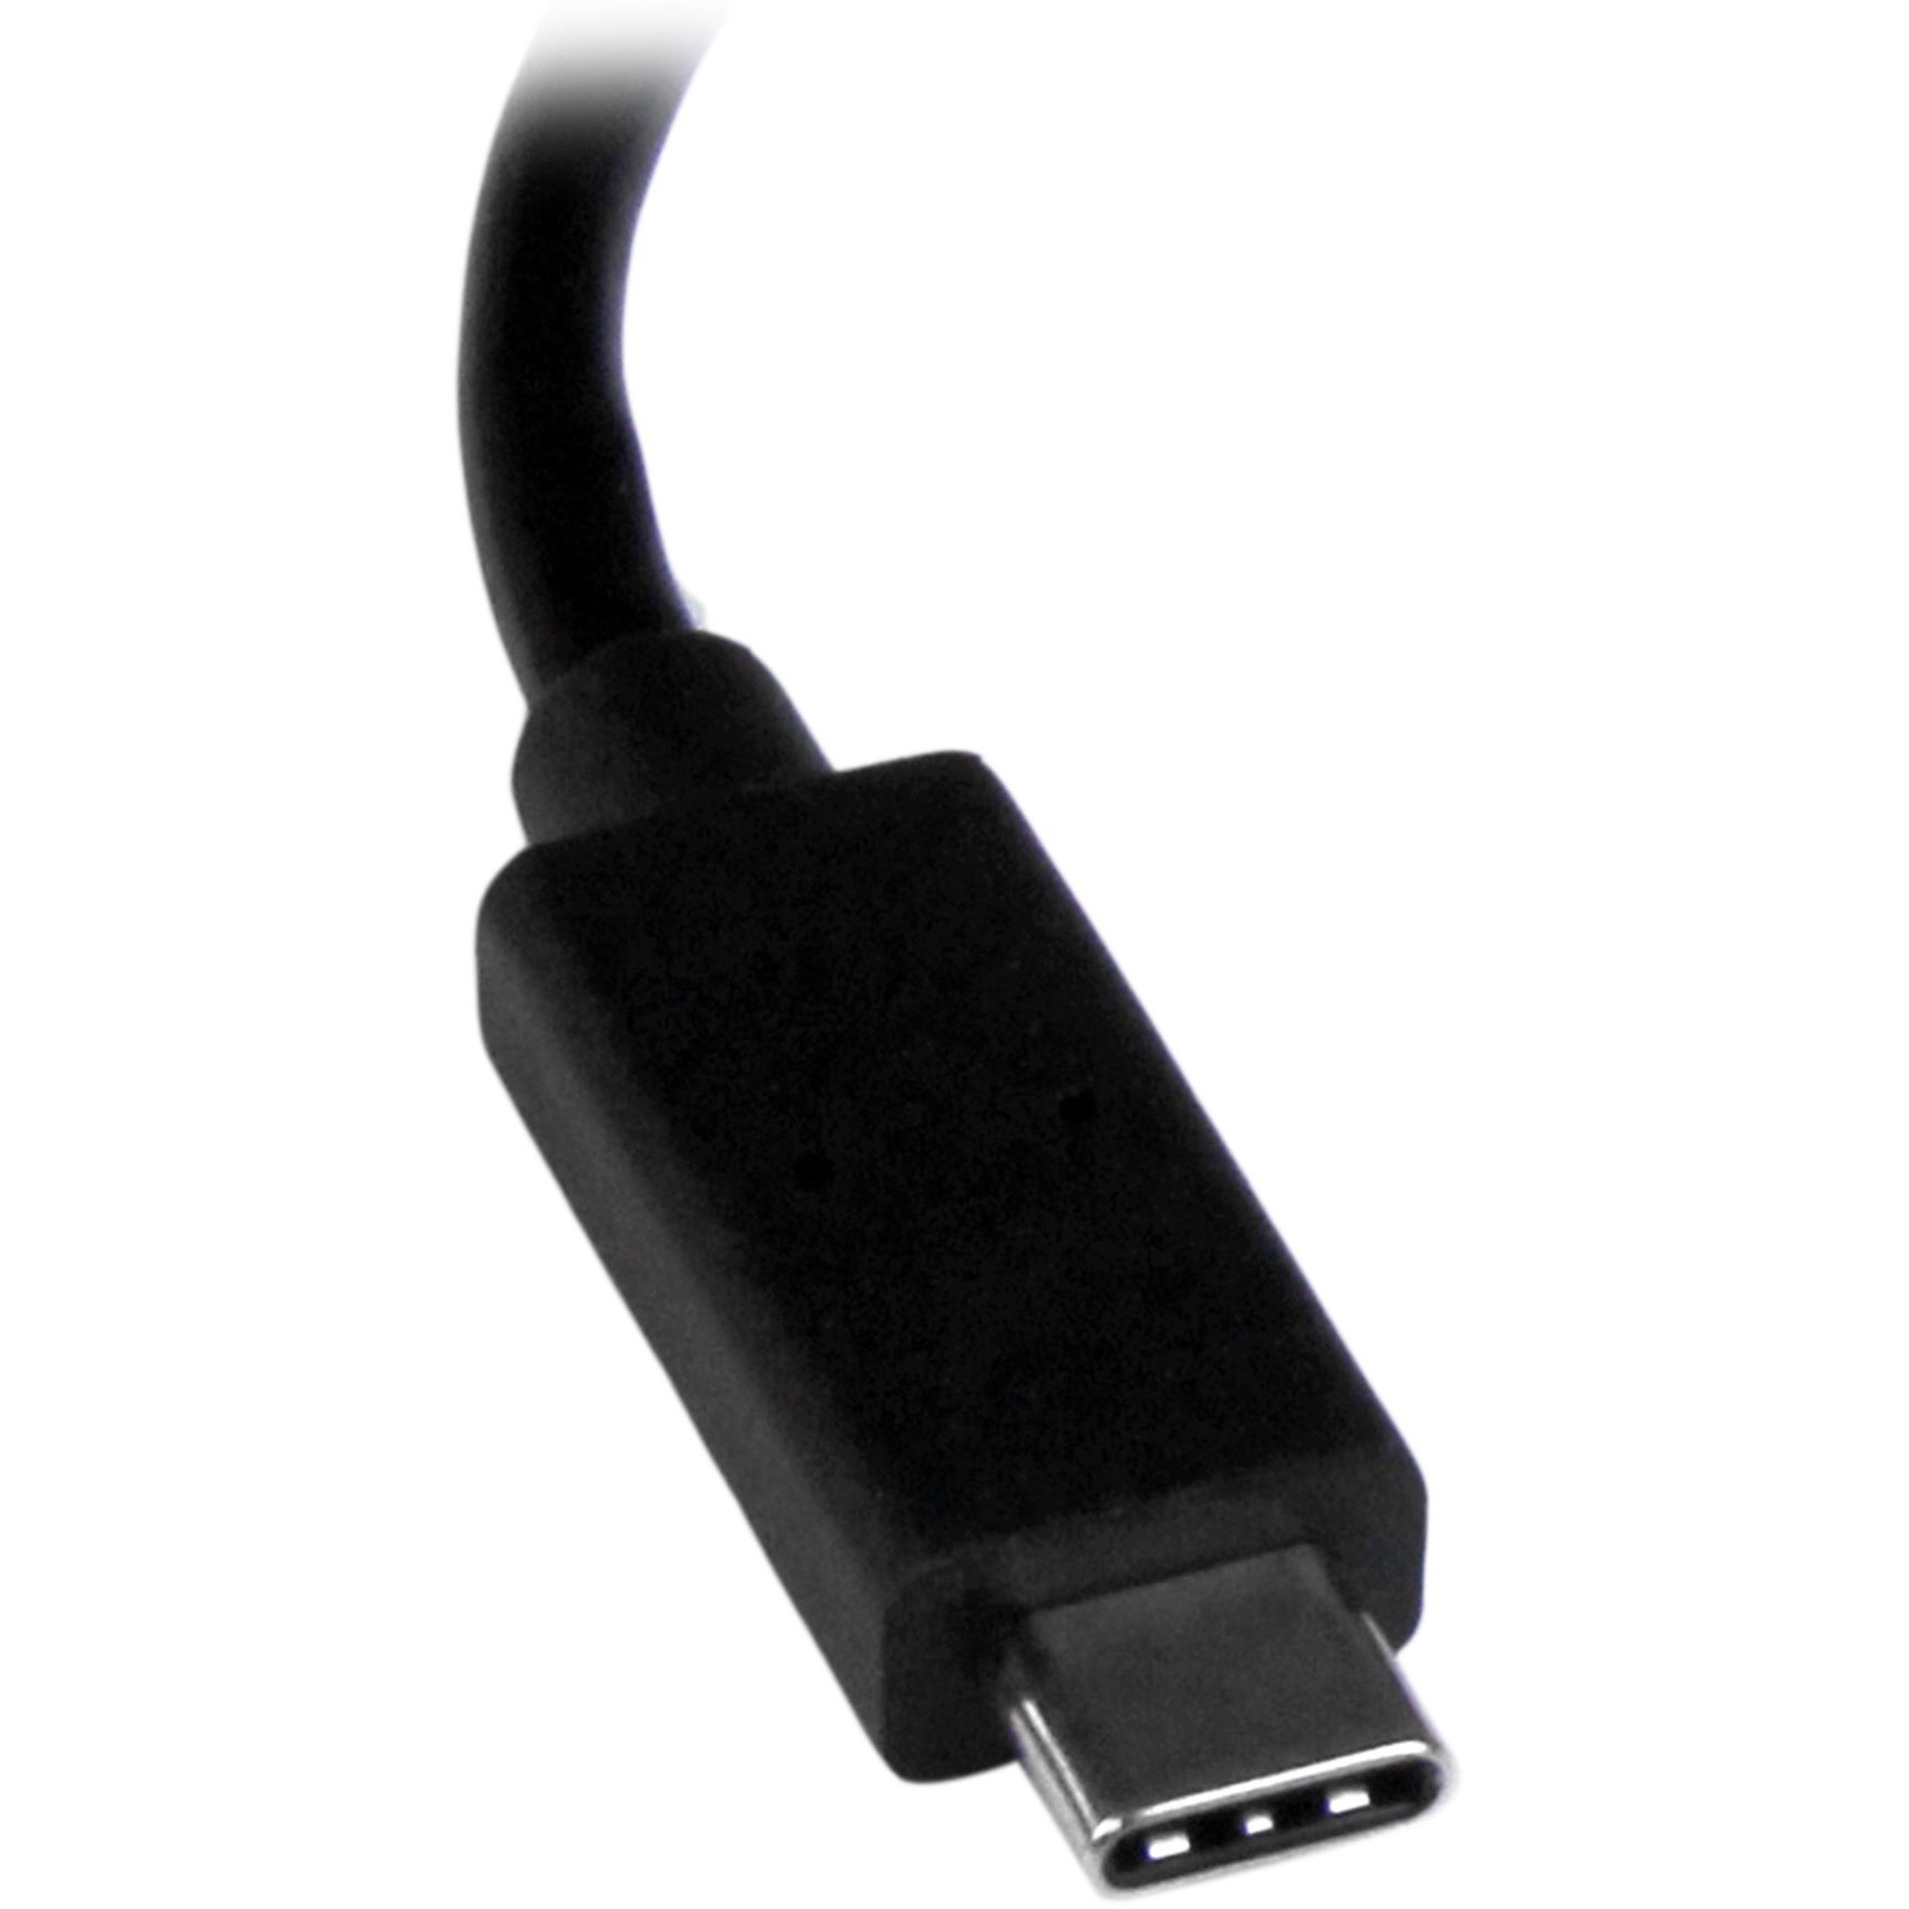 StarTech.com USB C Hub �����" 4 Port USB-C to USB-A (3x) and USB-C (1x) �����" with Power Adapter �����" USB Type C Hub �����" Port Expander - image 2 of 7